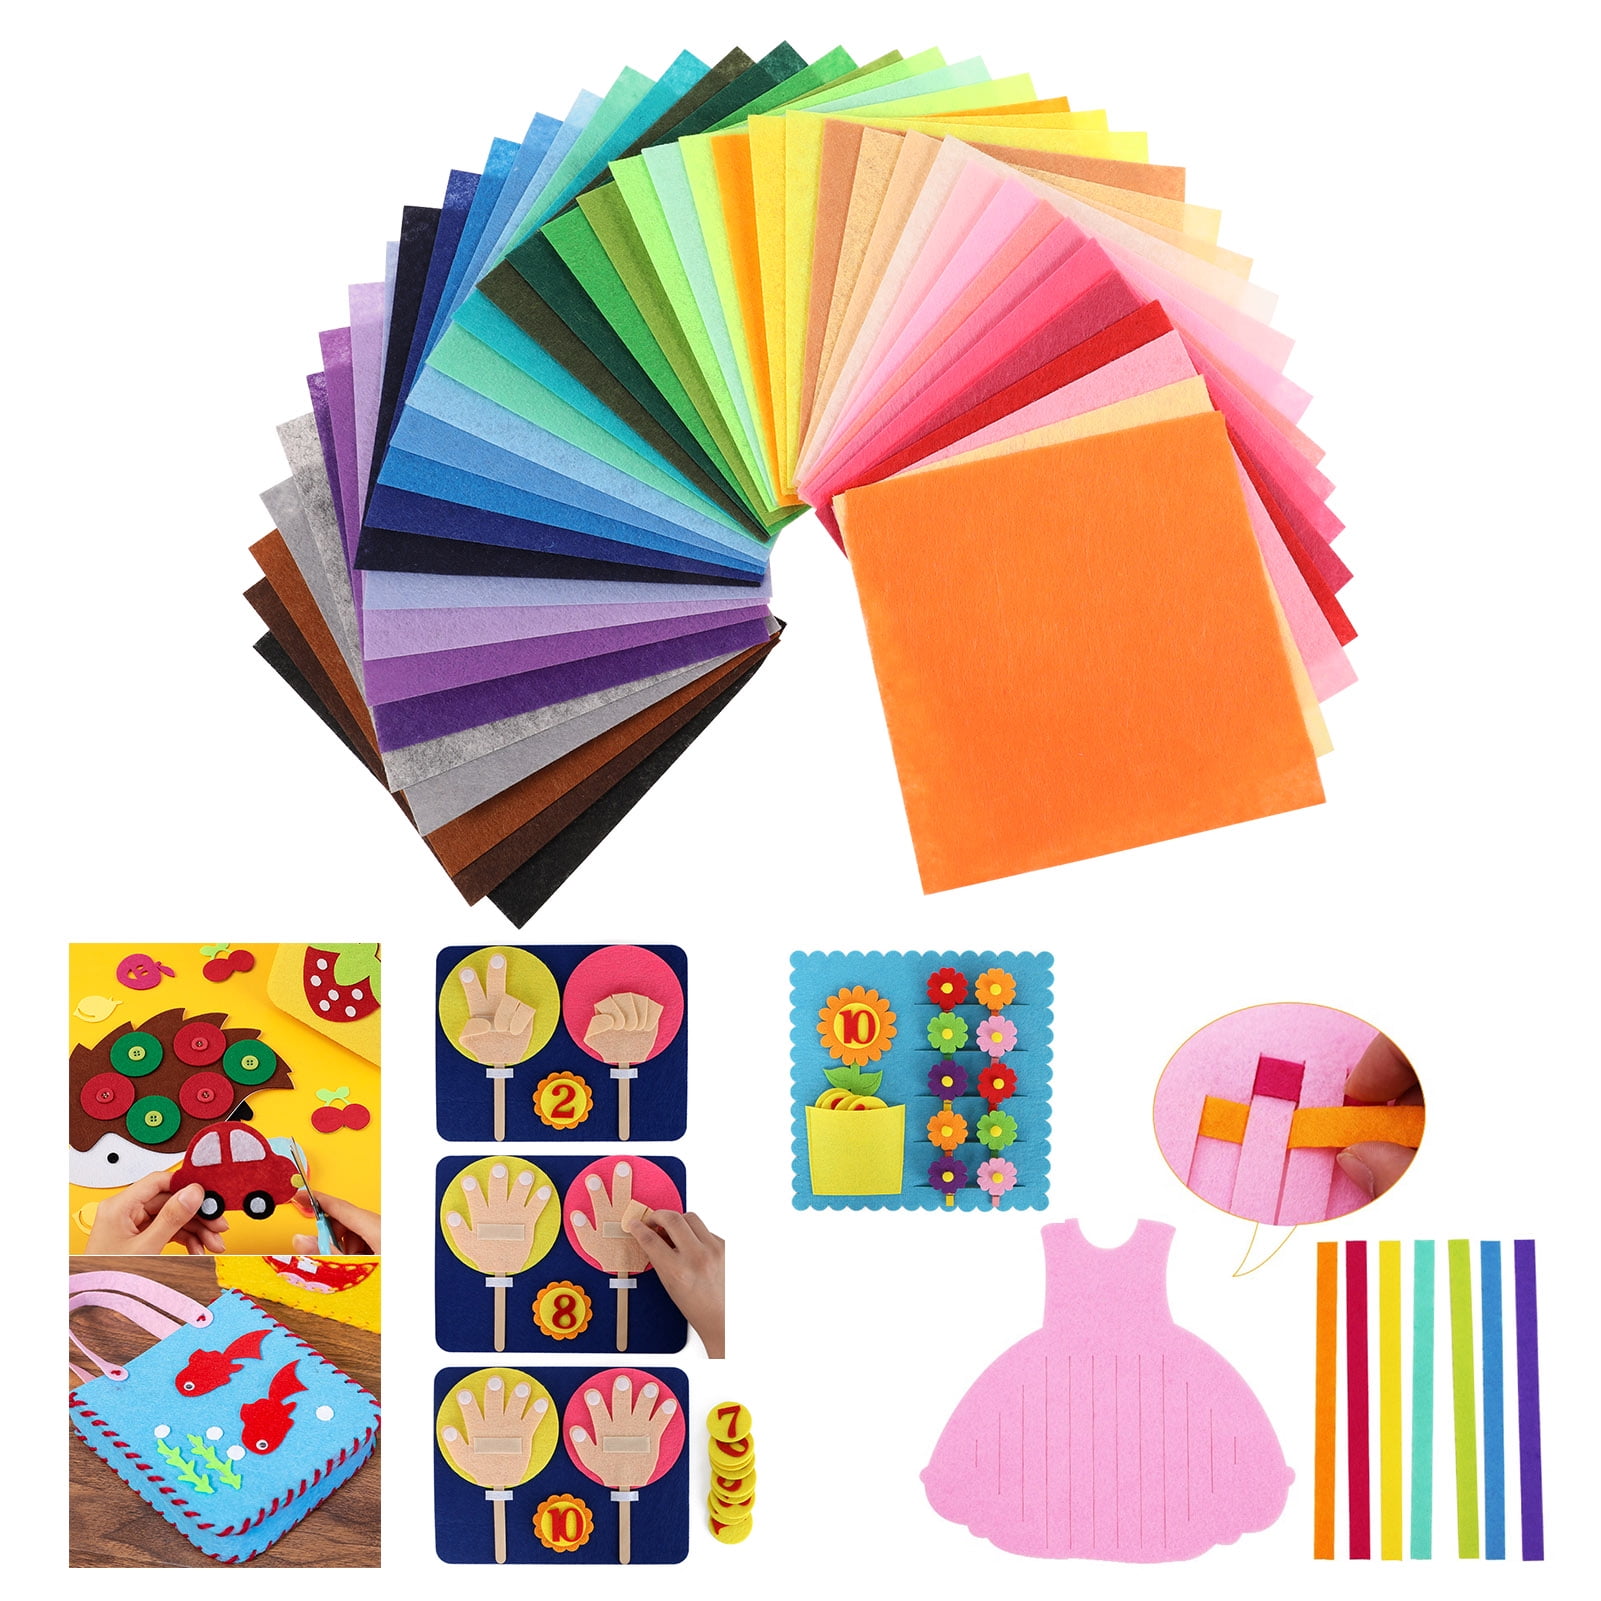 KaKaPops 50Pcs Felt Fabric Sheets, Assorted Colors Soft Felt Sheets for  Crafts DIY Patchwork Sewing School Projects Decoration, 50 Colors (4 x 4